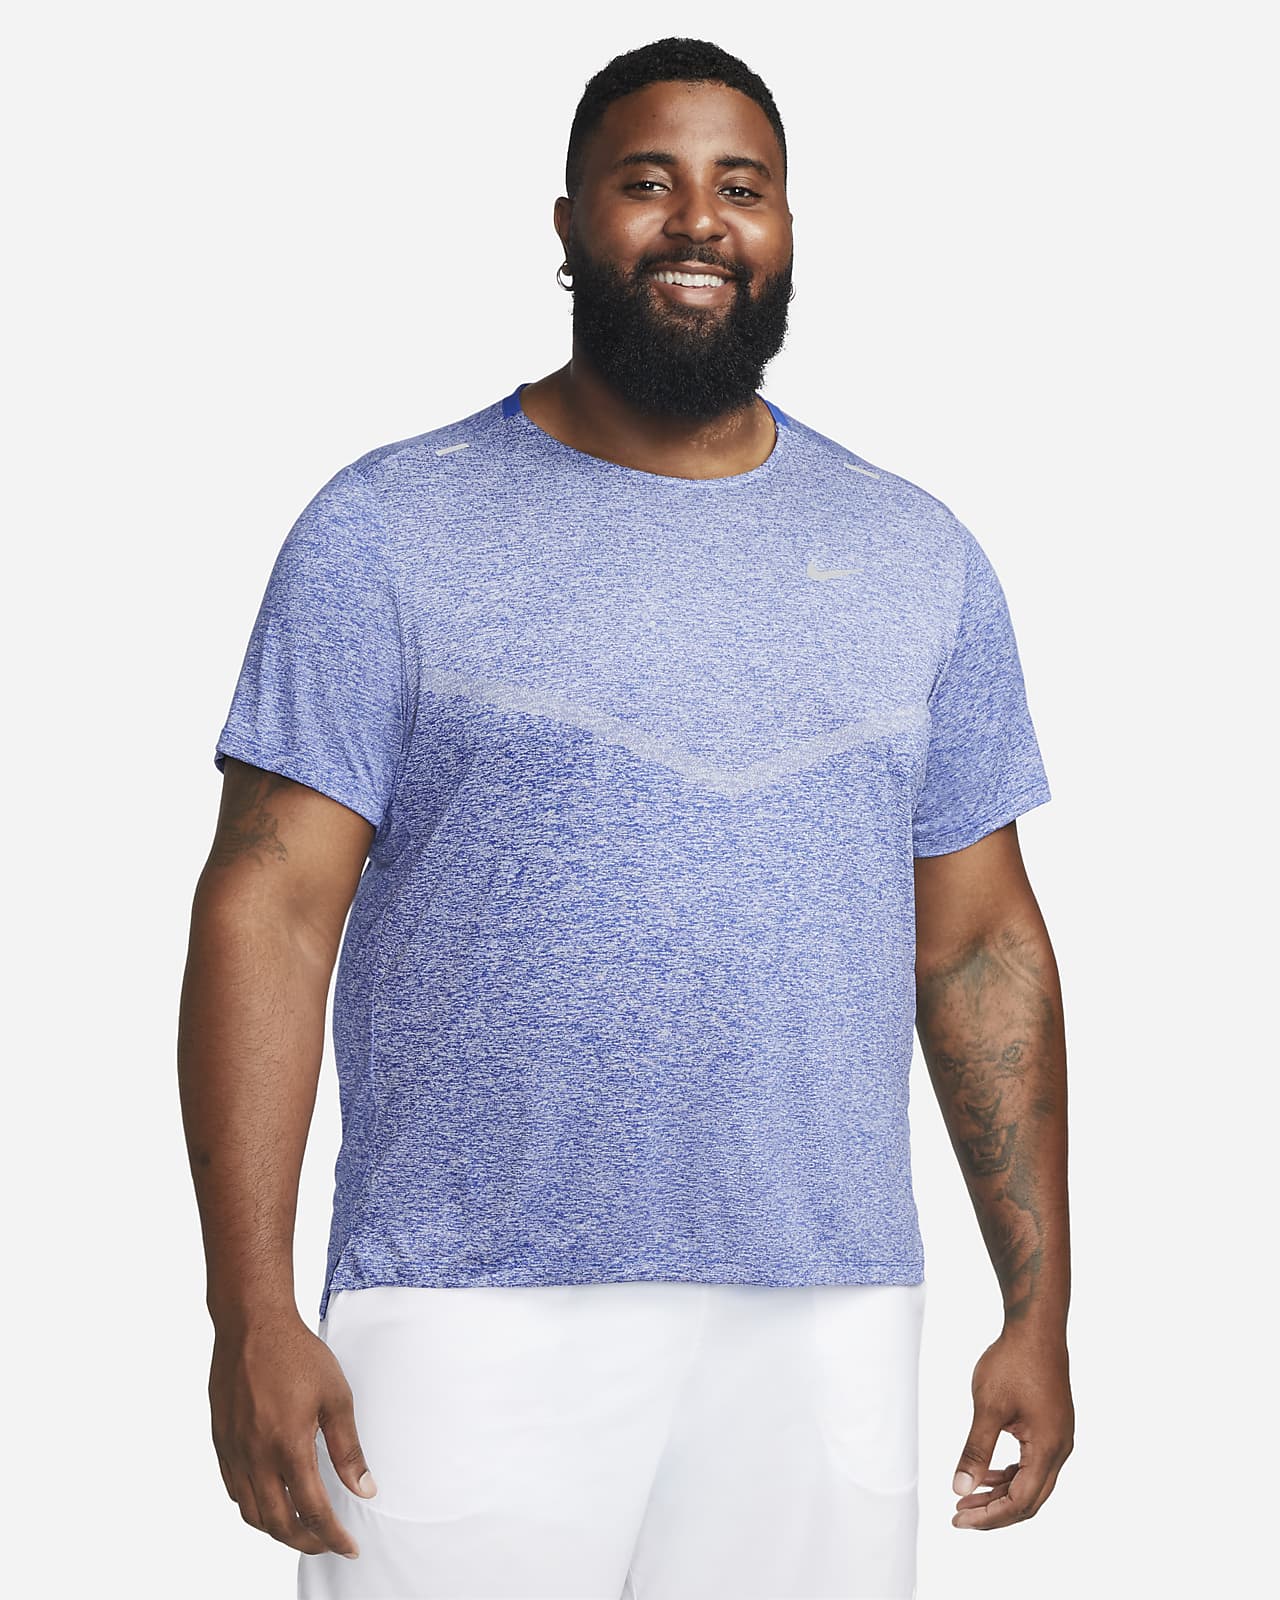 Camiseta Nike Run Division Rise 365 - Masculina em Promoção